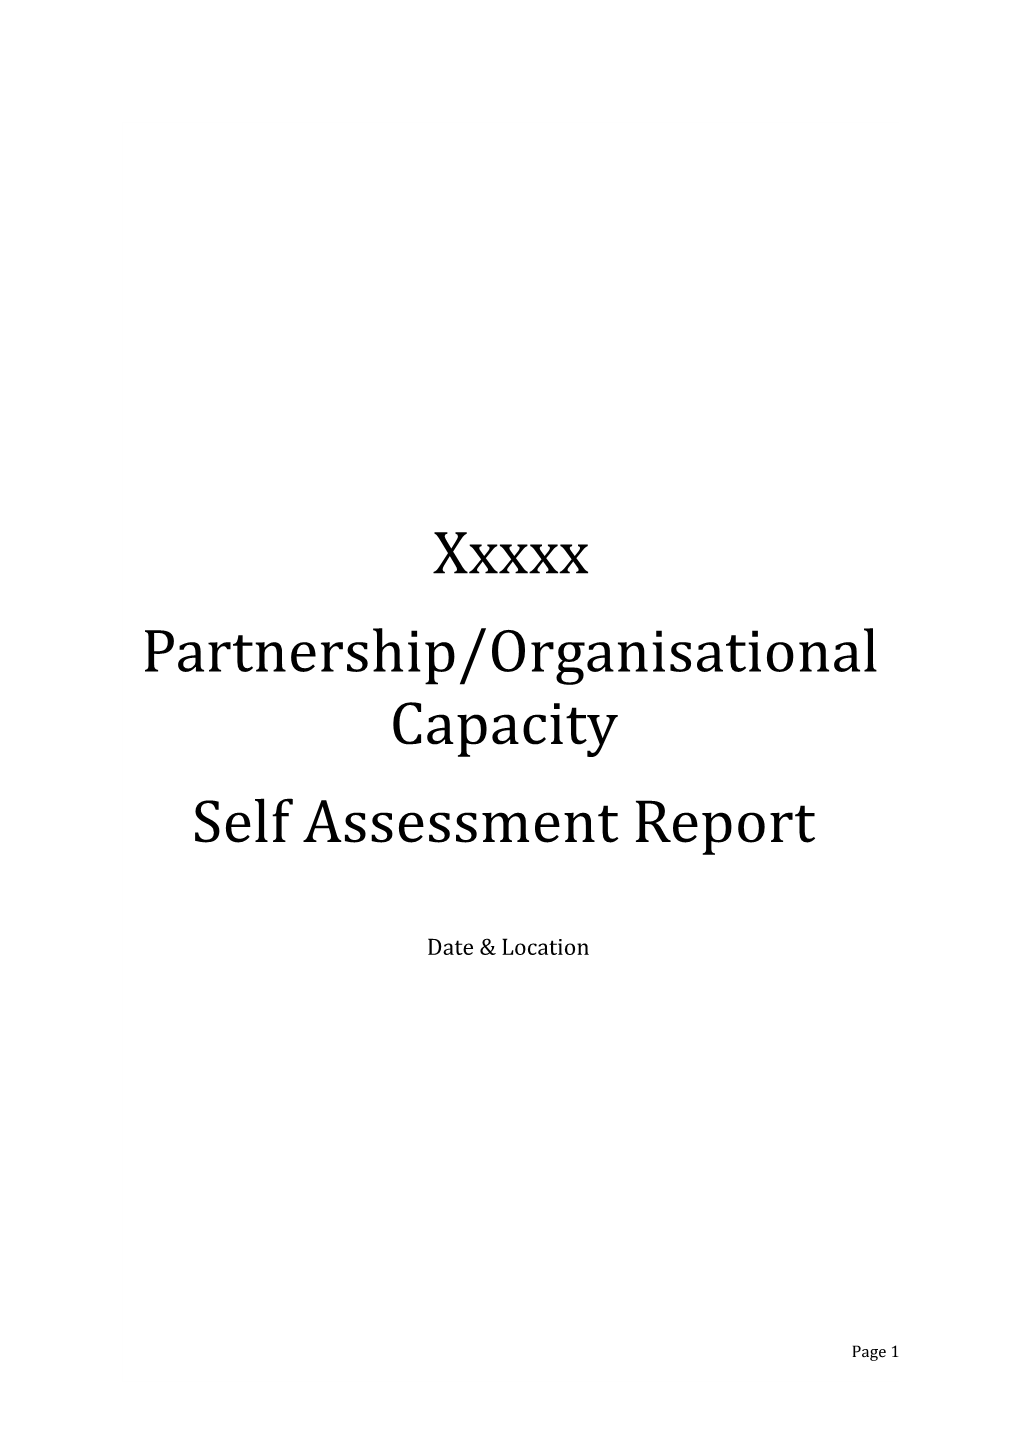 Partnership/Organisational Capacity